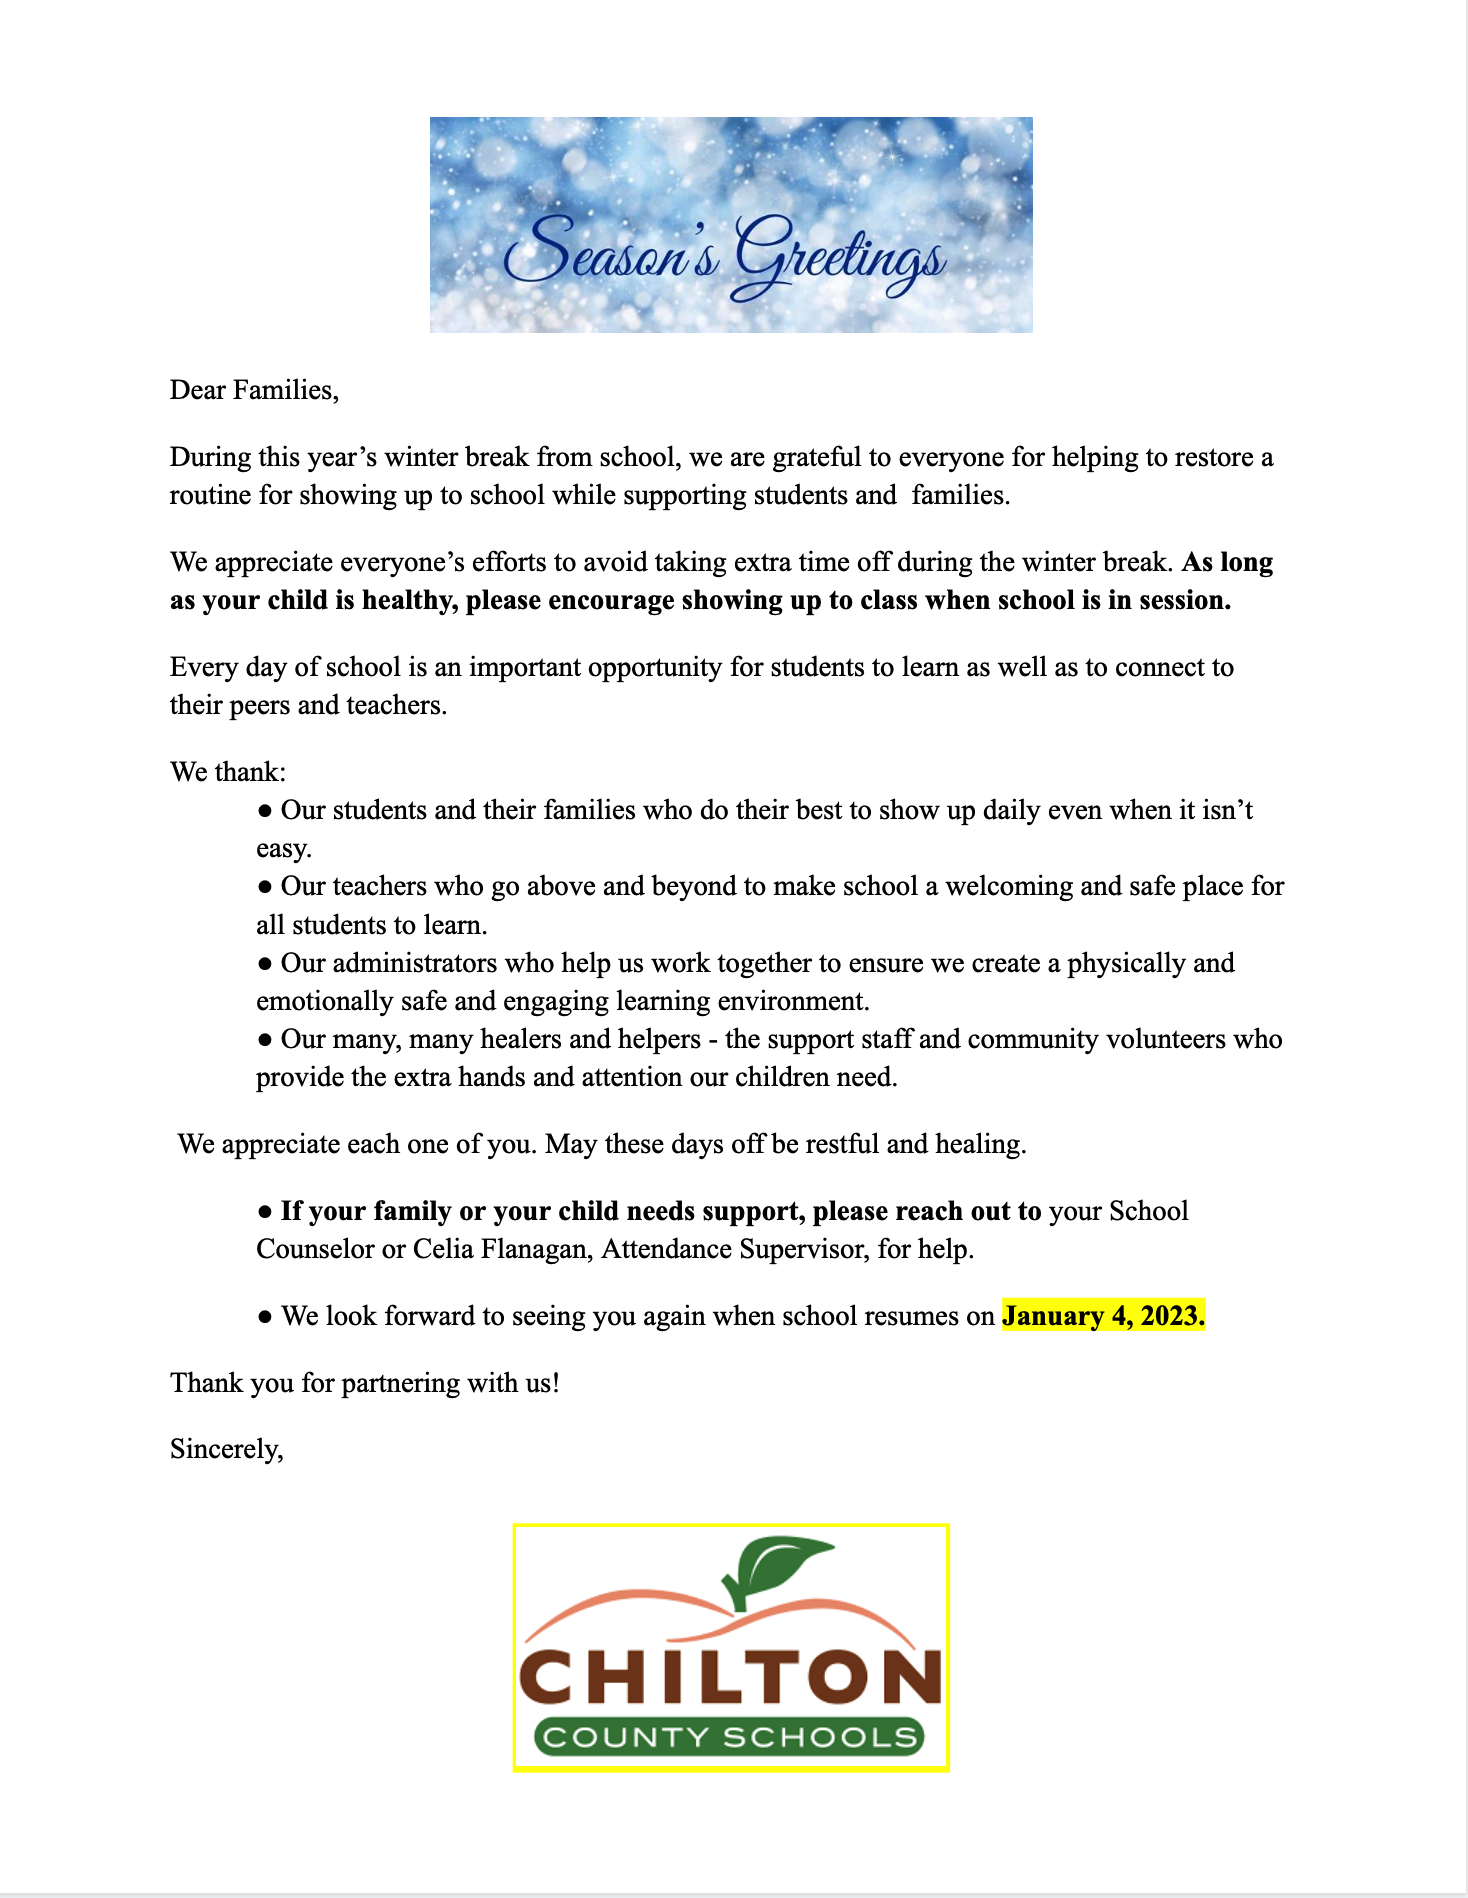 Winter Break Letter, for help please email cbflanagan@chiltonboe.com